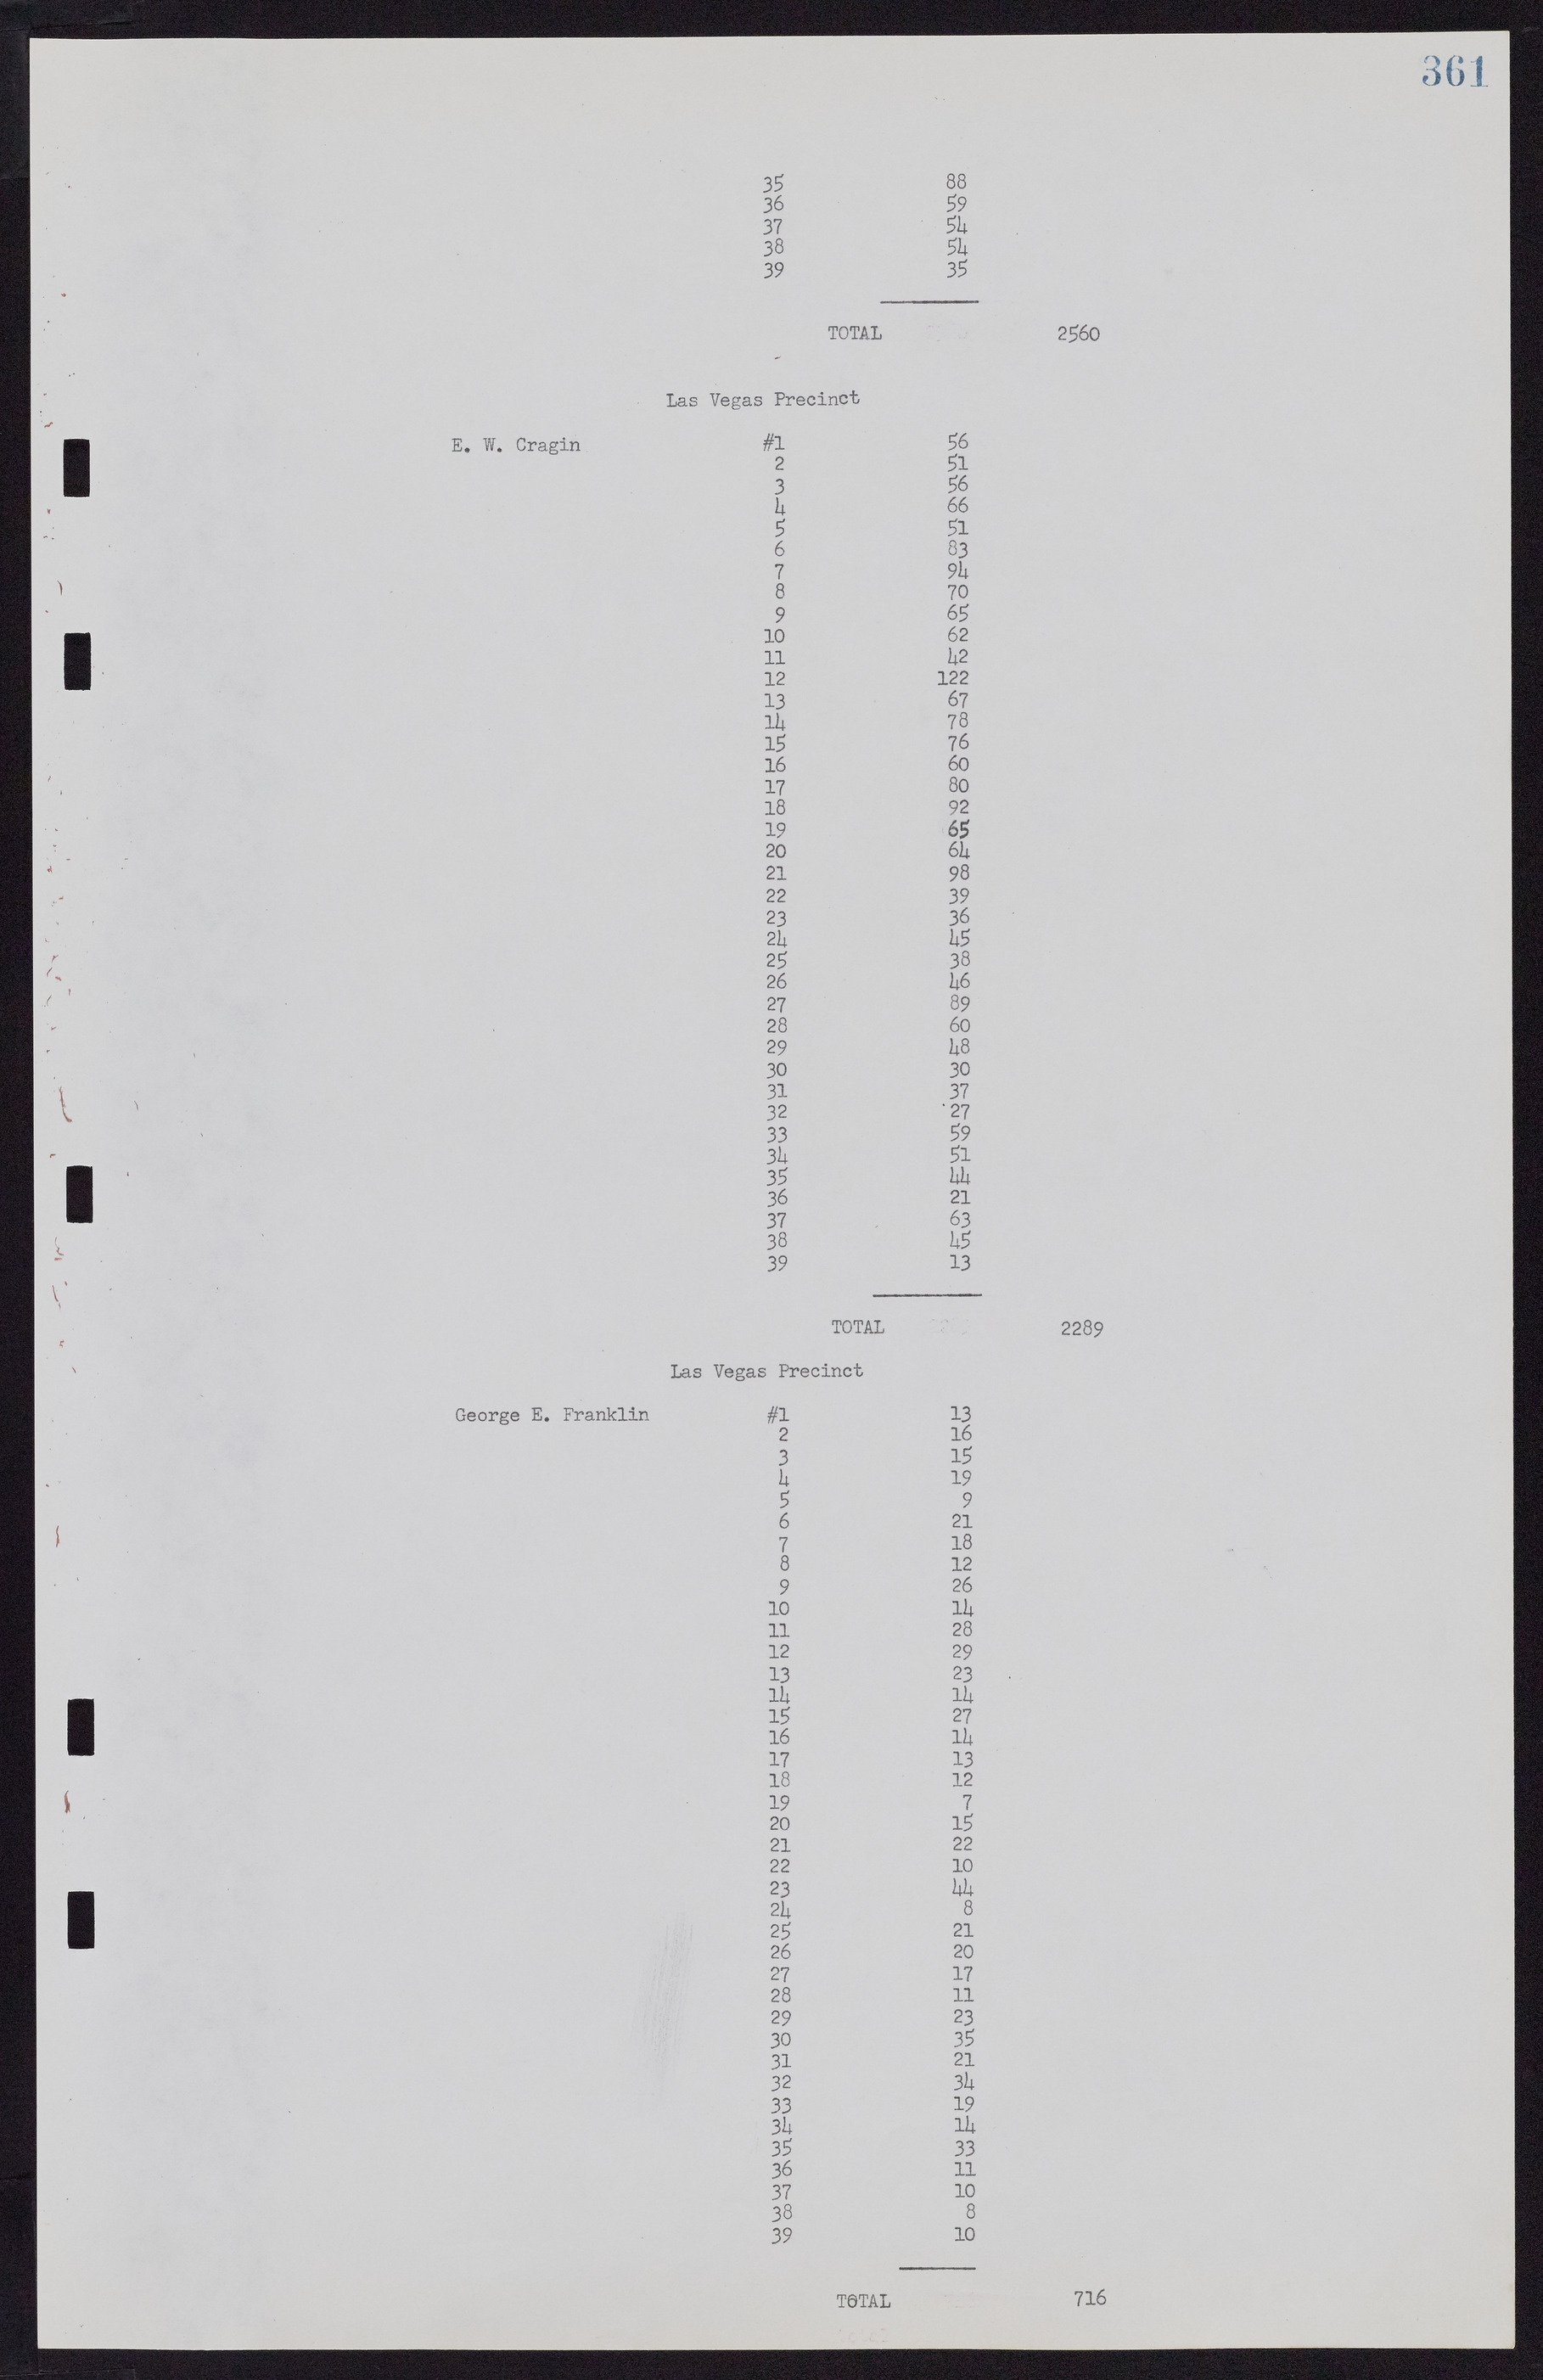 Las Vegas City Commission Minutes, November 7, 1949 to May 21, 1952, lvc000007-373